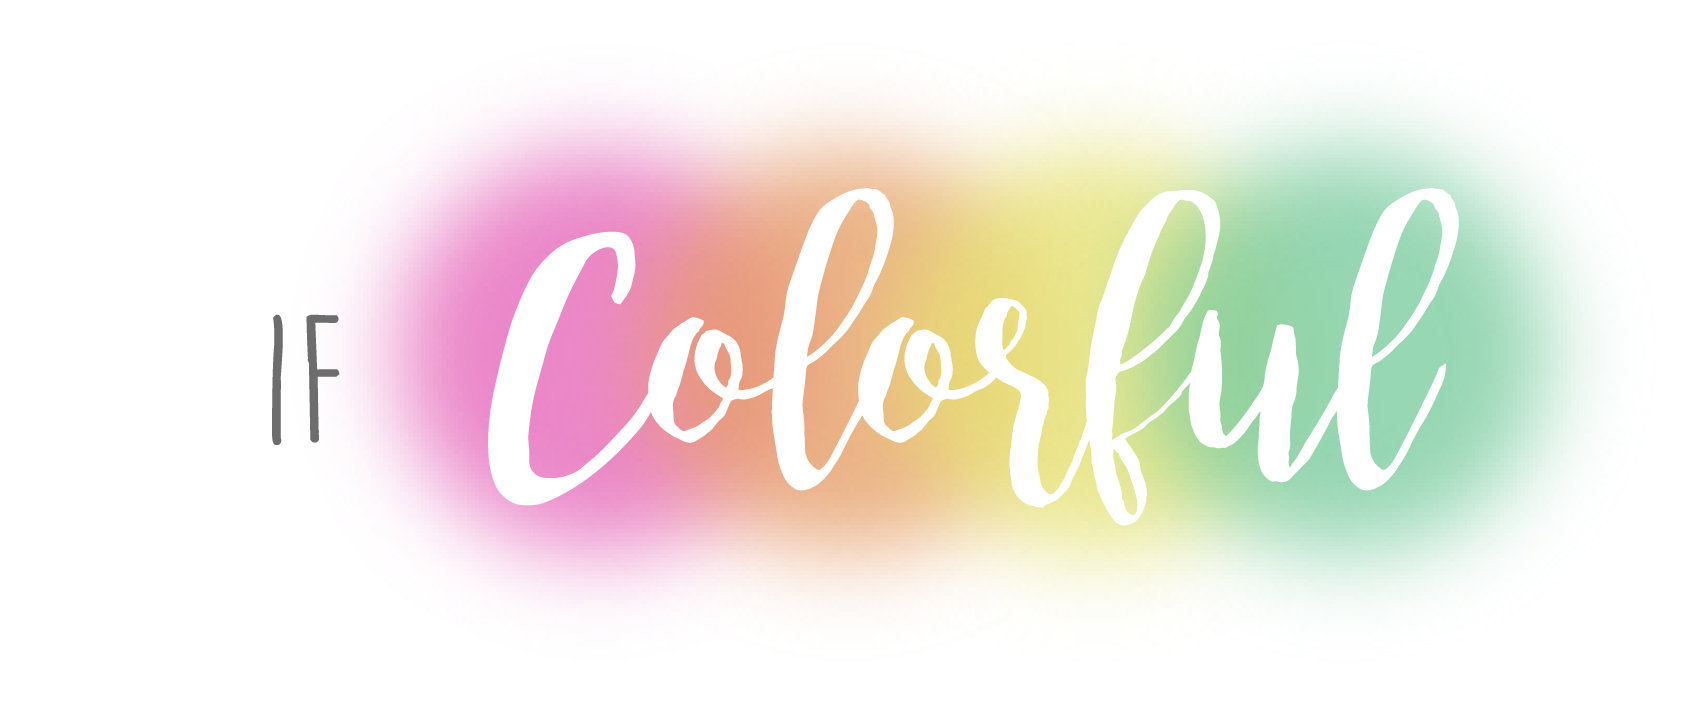 ifcolorful.com